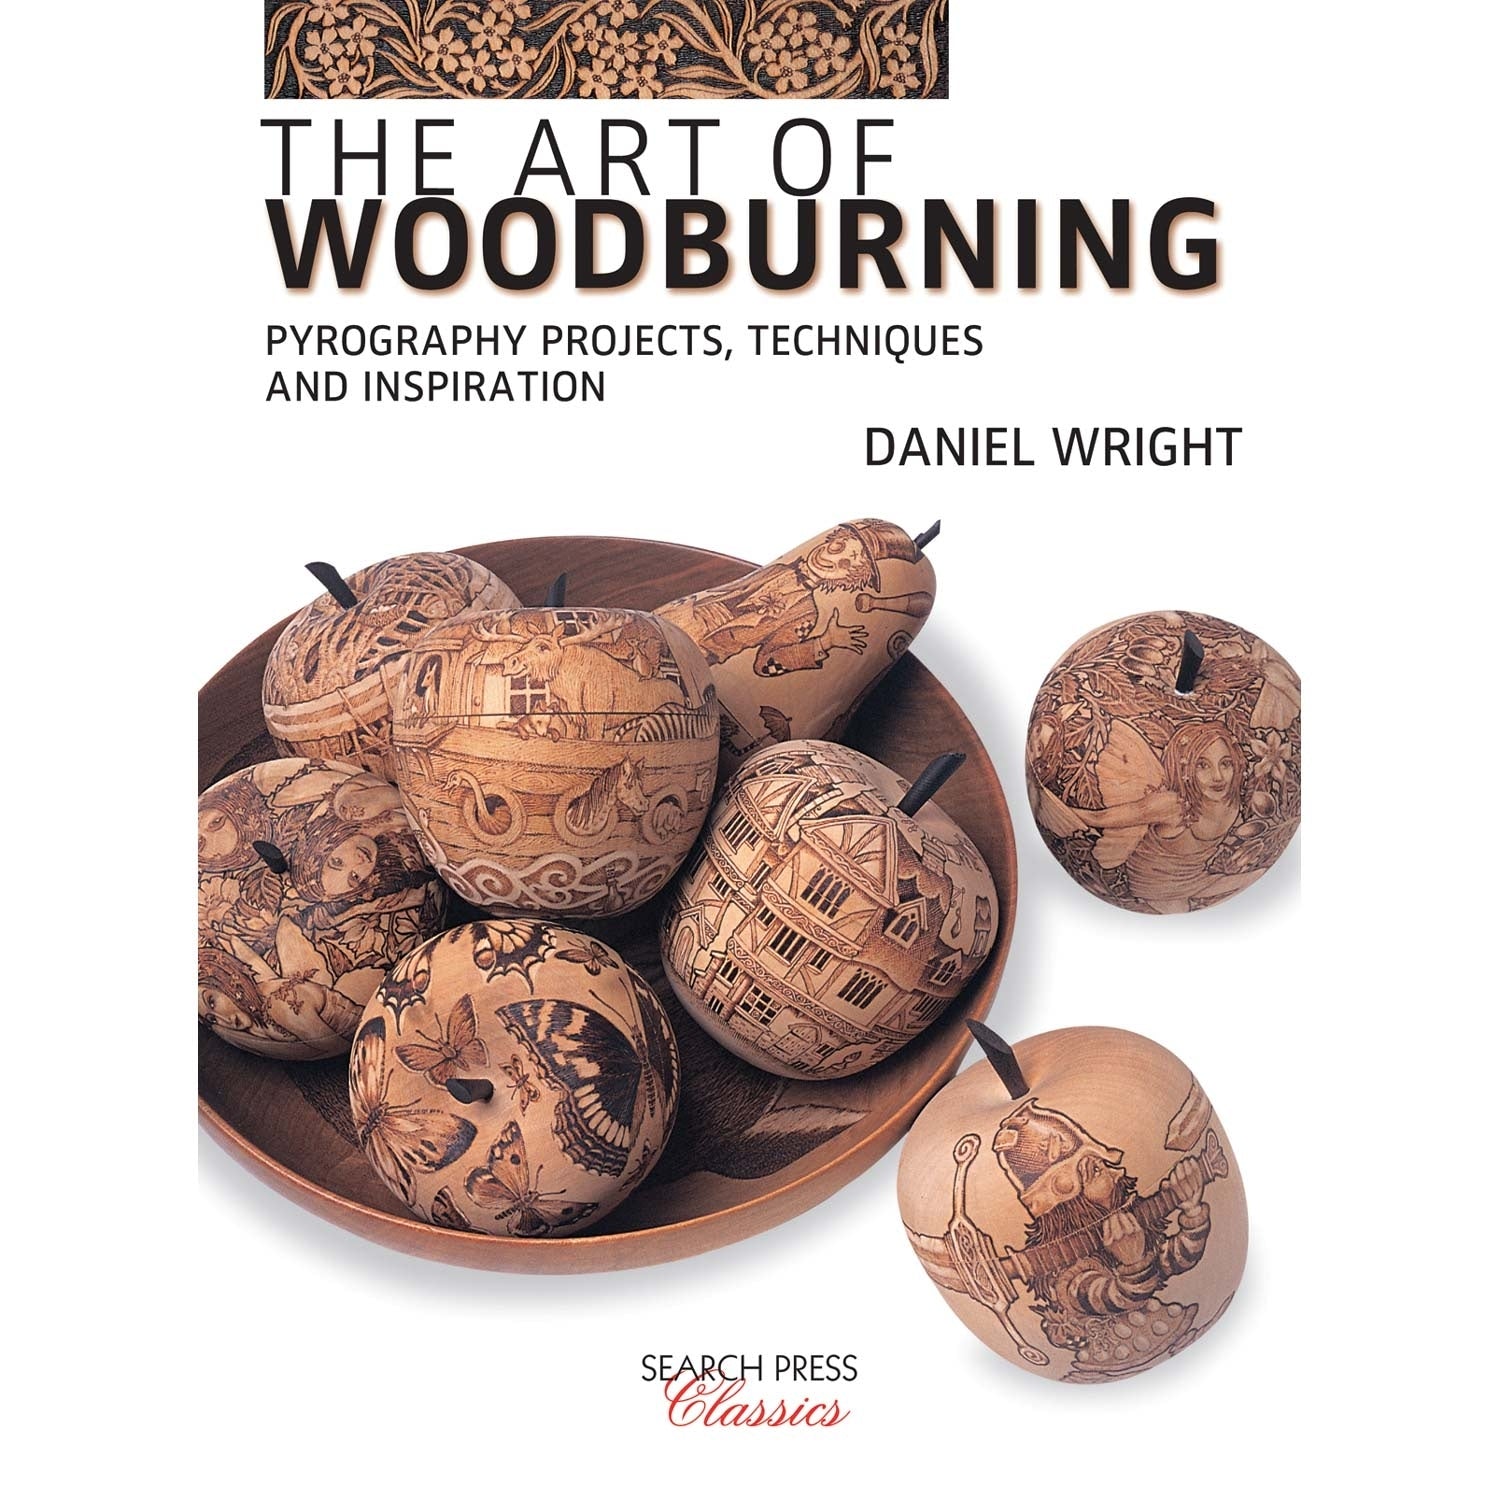 Rechercher des livres de presse - L'art de Woodburning